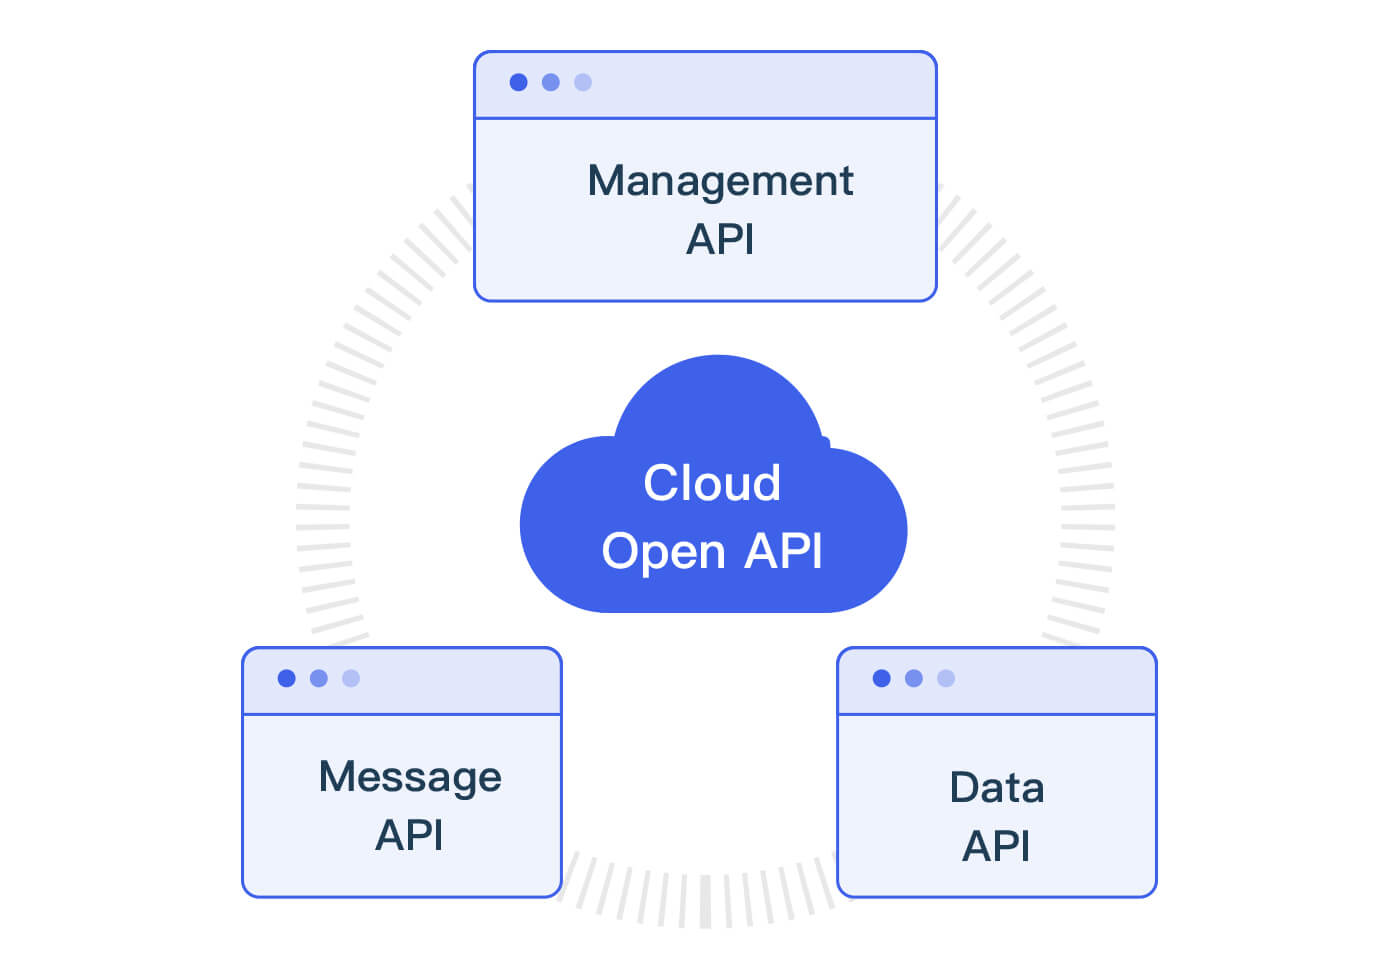 Cloud Open API